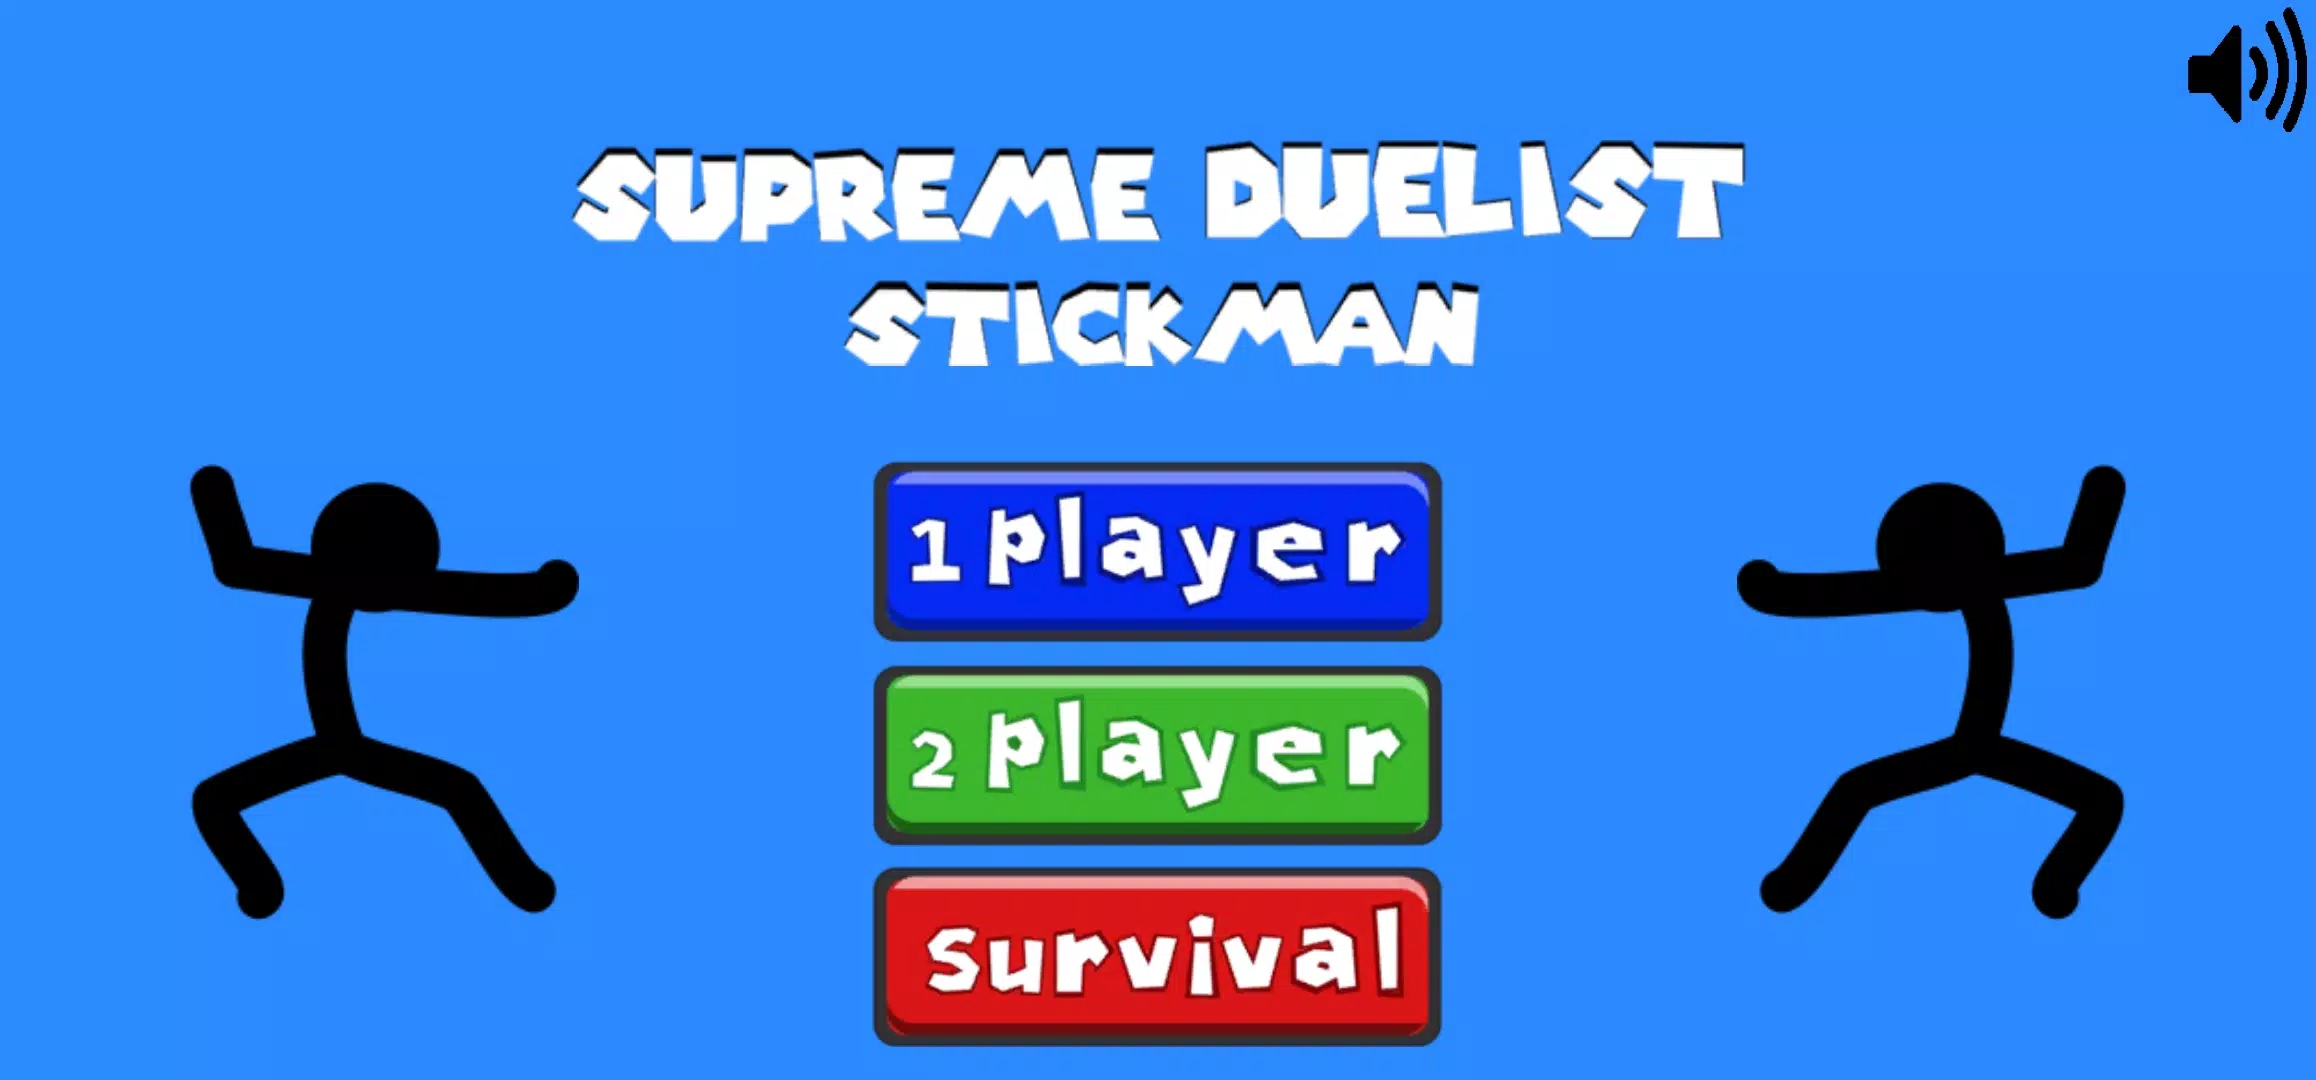 CapCut_stickman supreme duelist animation